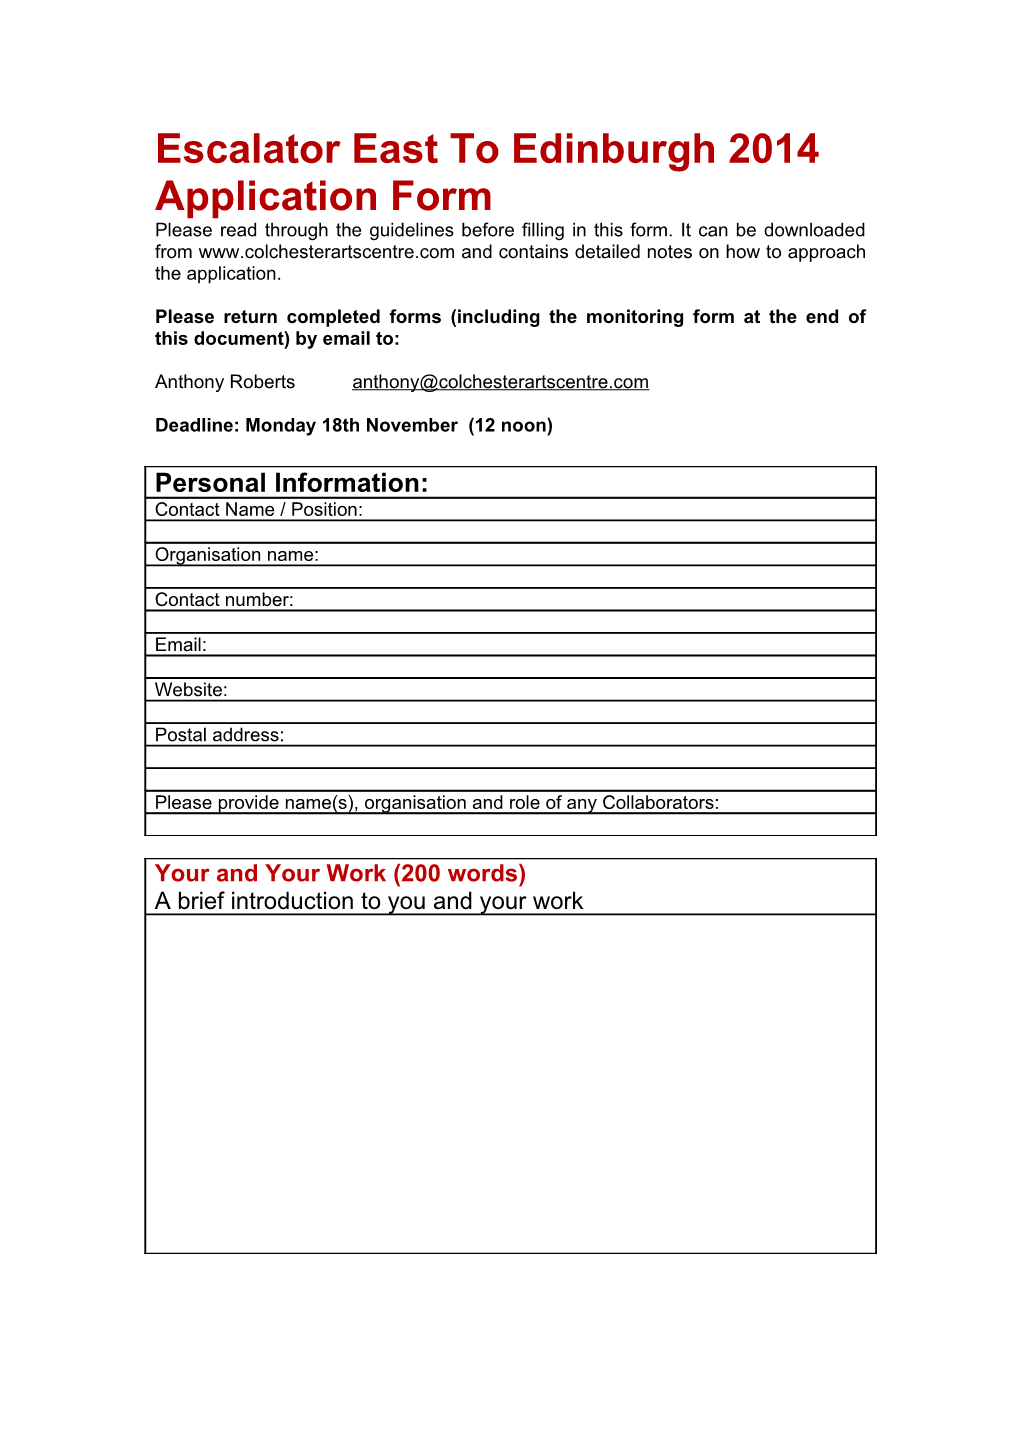 Escalator East to Edinburgh 2014 Application Form